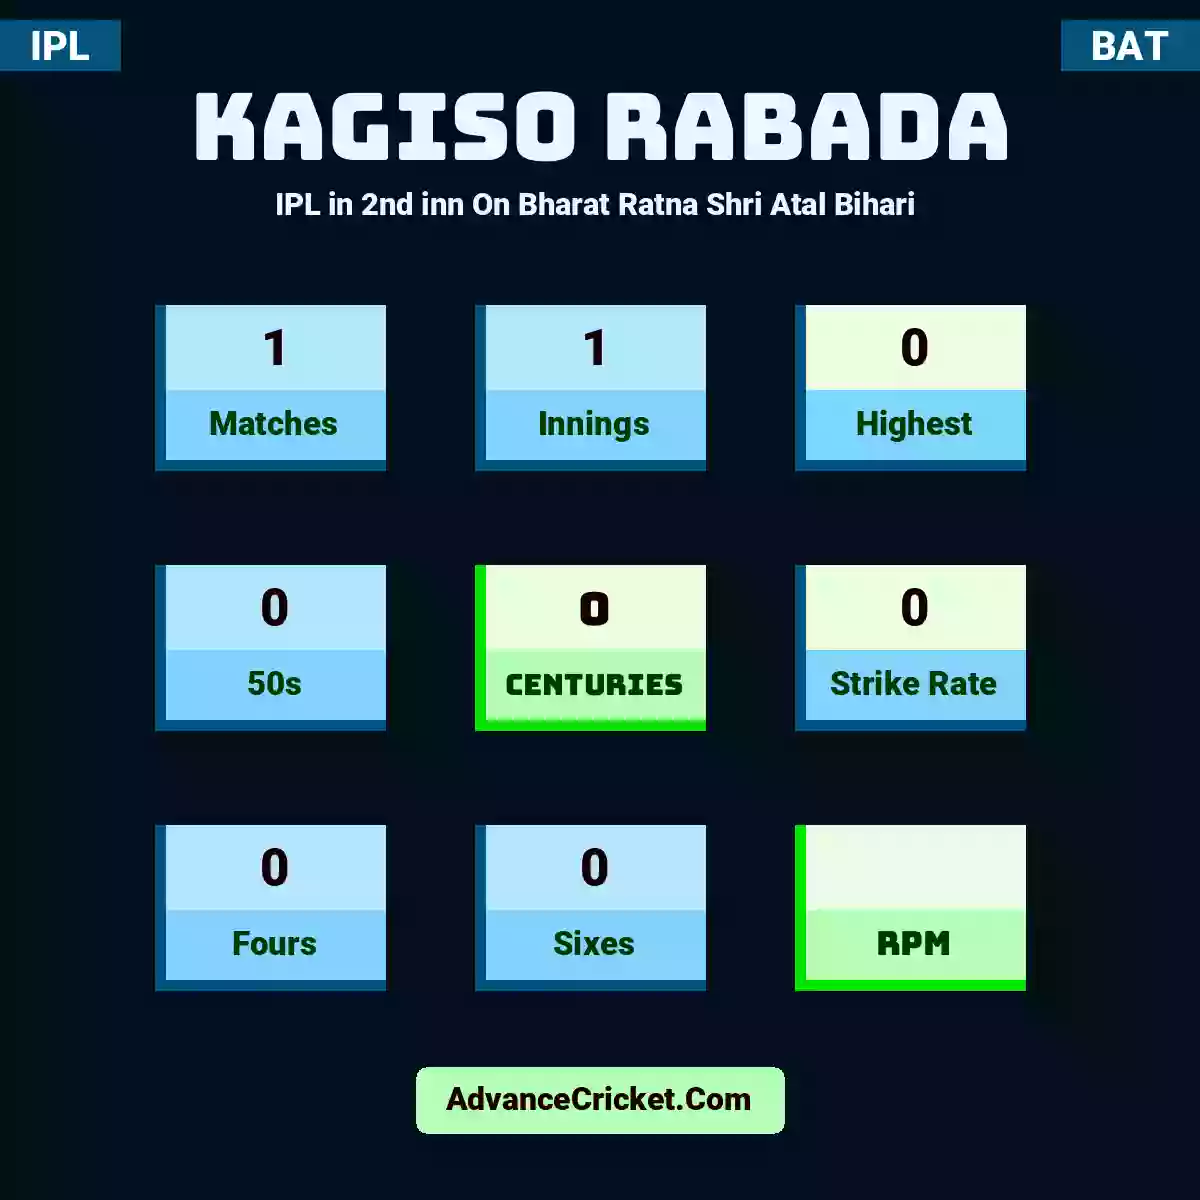 Kagiso Rabada IPL  in 2nd inn On Bharat Ratna Shri Atal Bihari , Kagiso Rabada played 1 matches, scored 0 runs as highest, 0 half-centuries, and 0 centuries, with a strike rate of 0. K.Rabada hit 0 fours and 0 sixes.